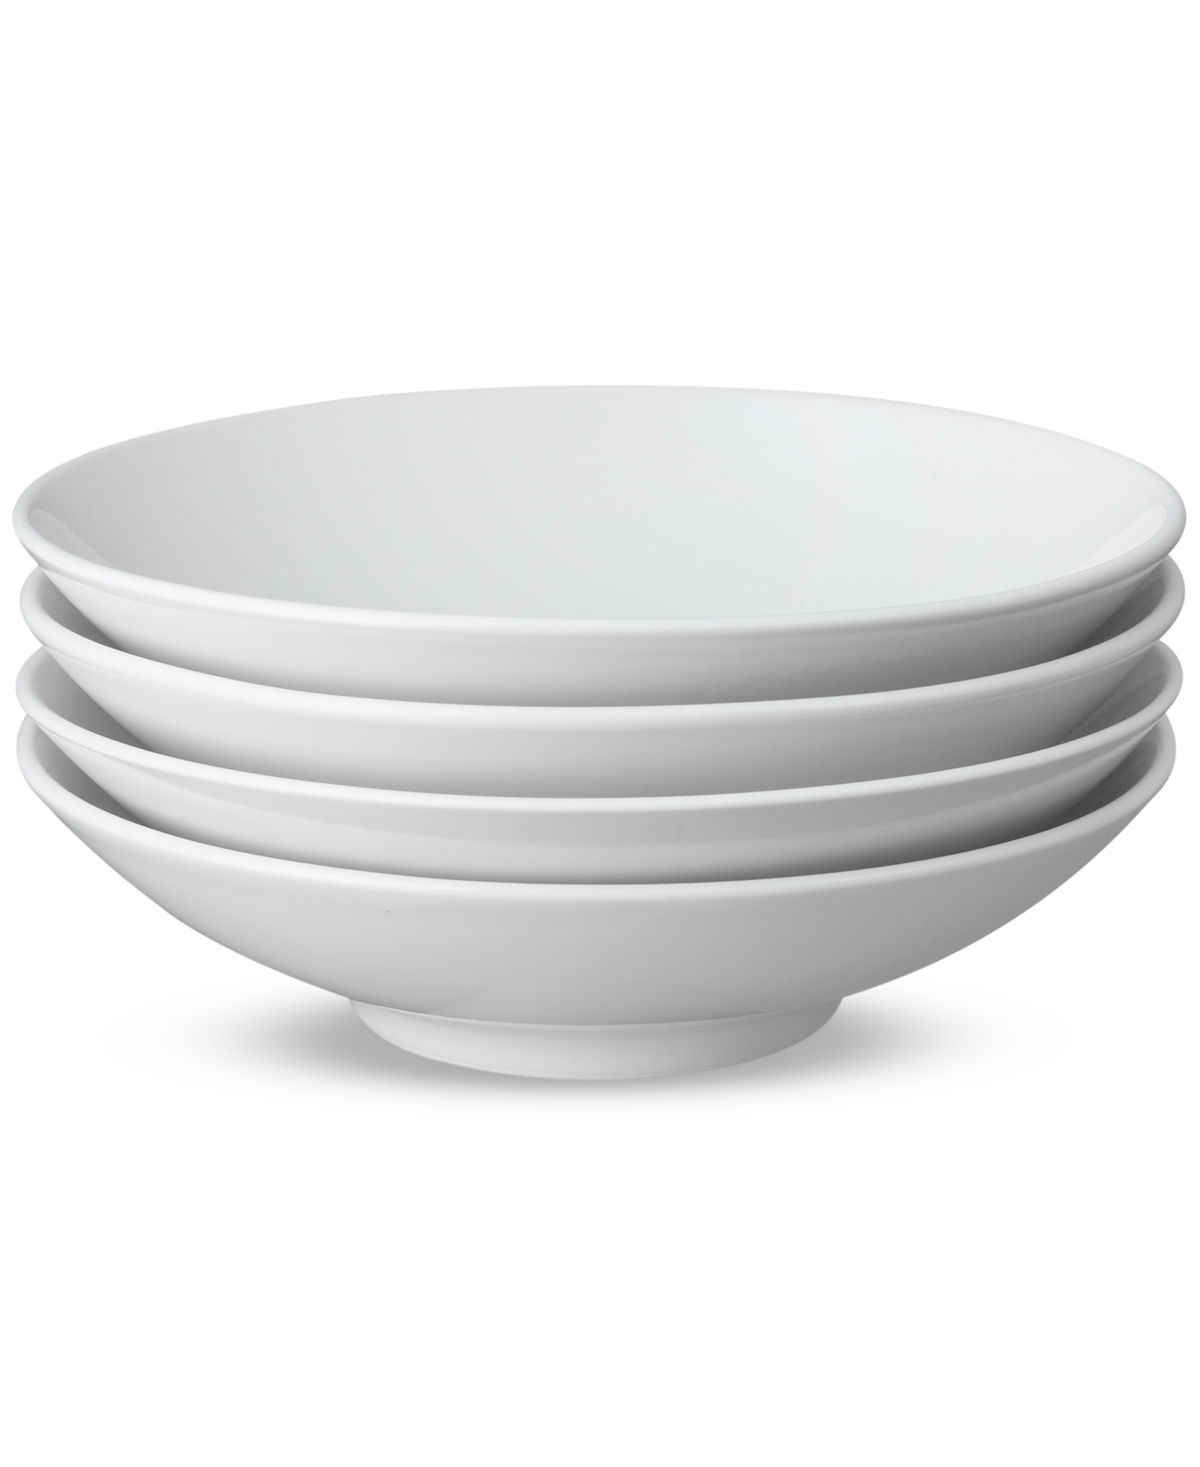 Classic White Porcelain Pasta Bowls, Set of 4 - White